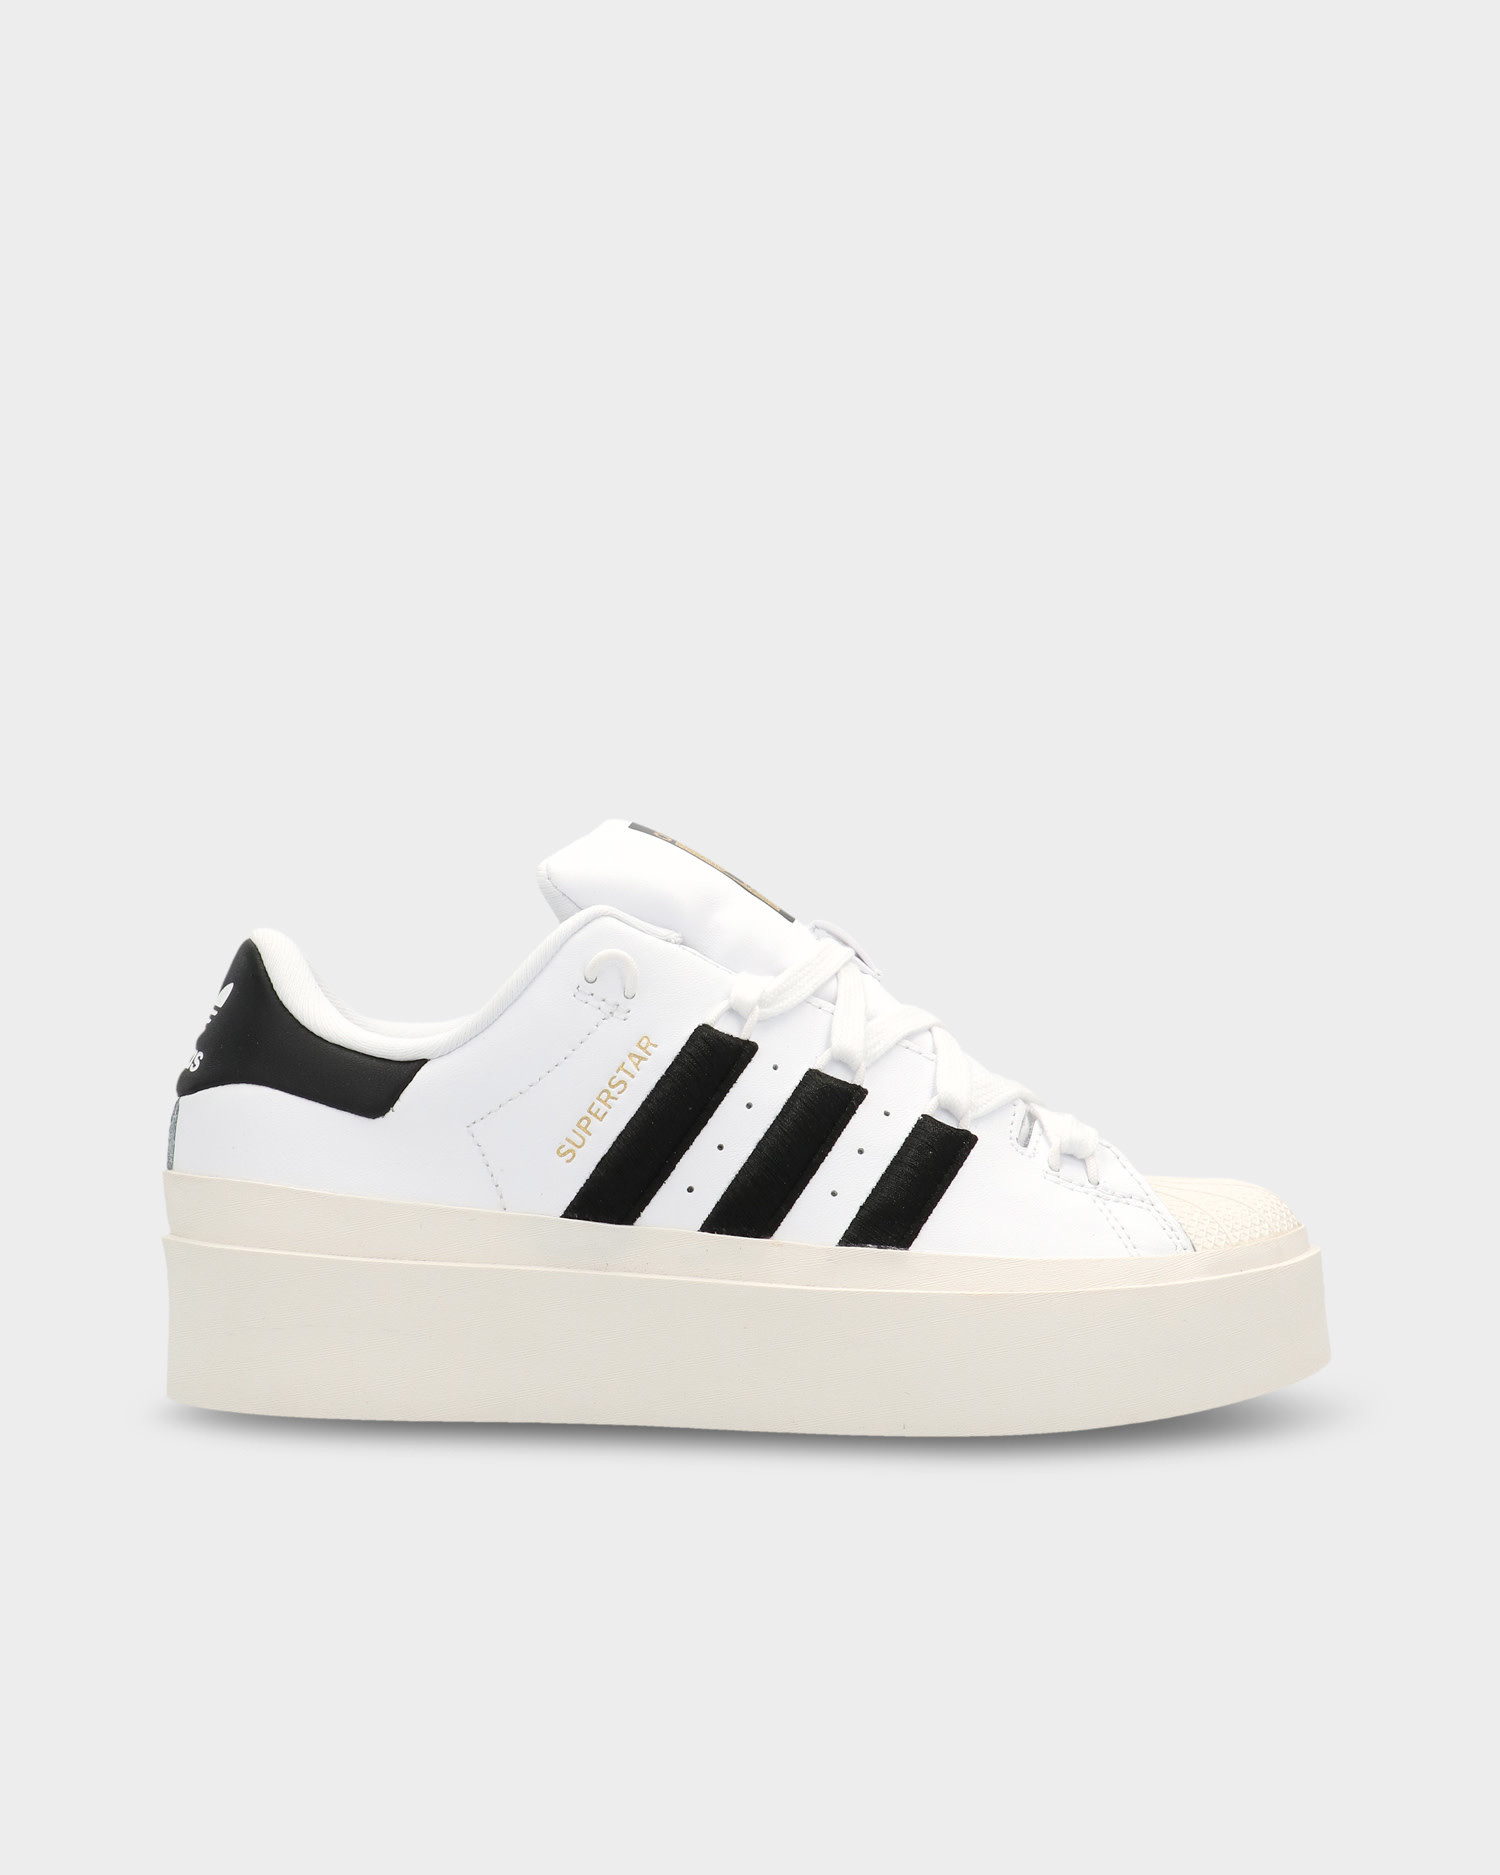 Adidas Superstar Bonega Ftwwht/Core Black/Off White